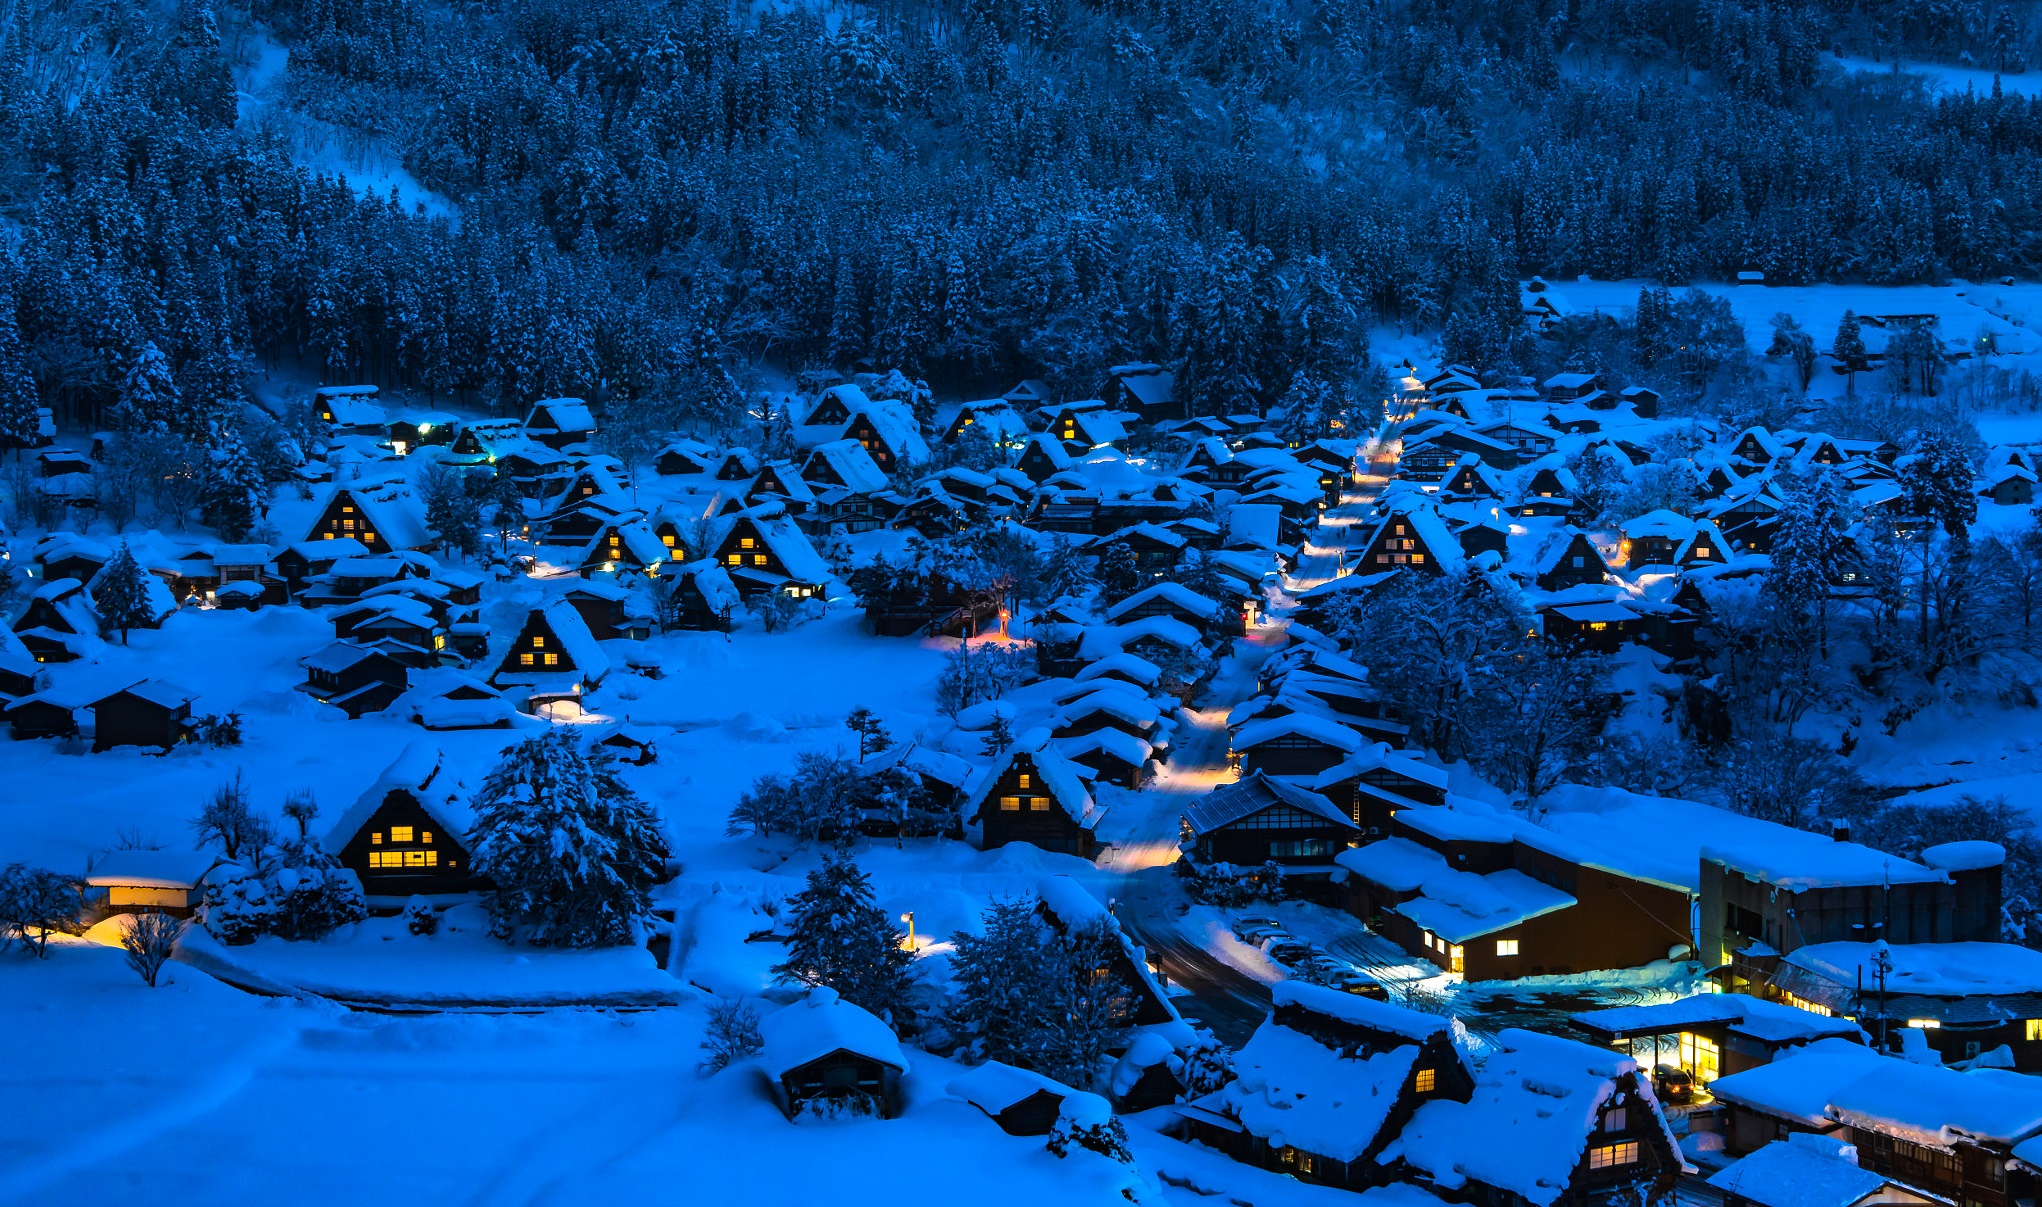 light up งานแสดงไฟ งานแสดงไฟ หมู่บ้านชิราคาวาโกะ ที่เที่ยวญี่ปุ่น ที่เที่ยวหน้าหนาว หมู่บ้านชิราคาวาโกะ หมู่บ้านมรดกโลก เทศกาลประดับไฟ เทศกาลหน้าหนาว เที่ยวญี่ปุ่น เที่ยวหน้าหนาว ญี่ปุ่น